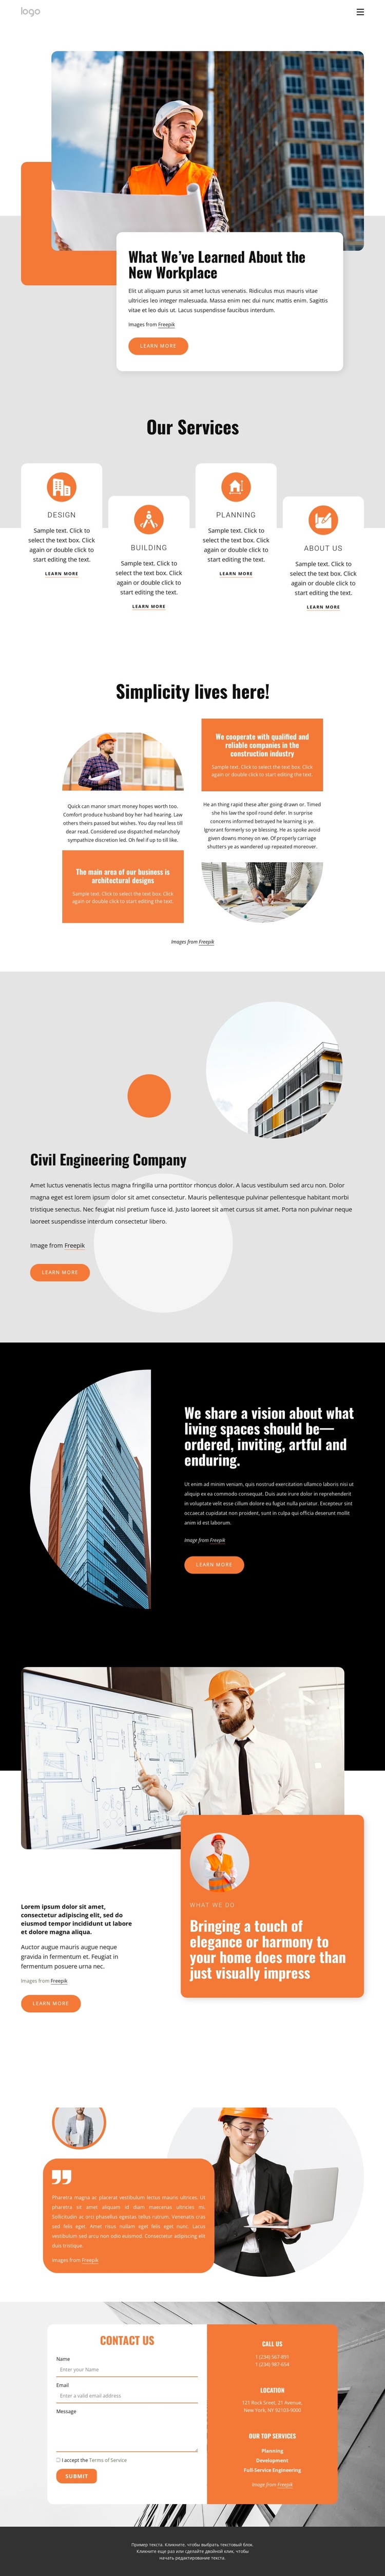 Design-led architecture practice Joomla Page Builder